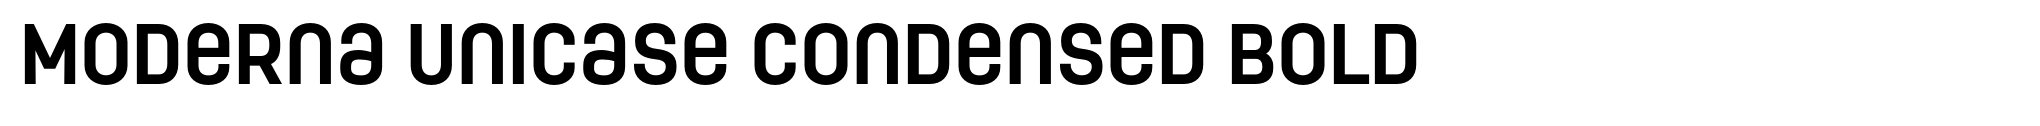 Moderna Unicase Condensed Bold image